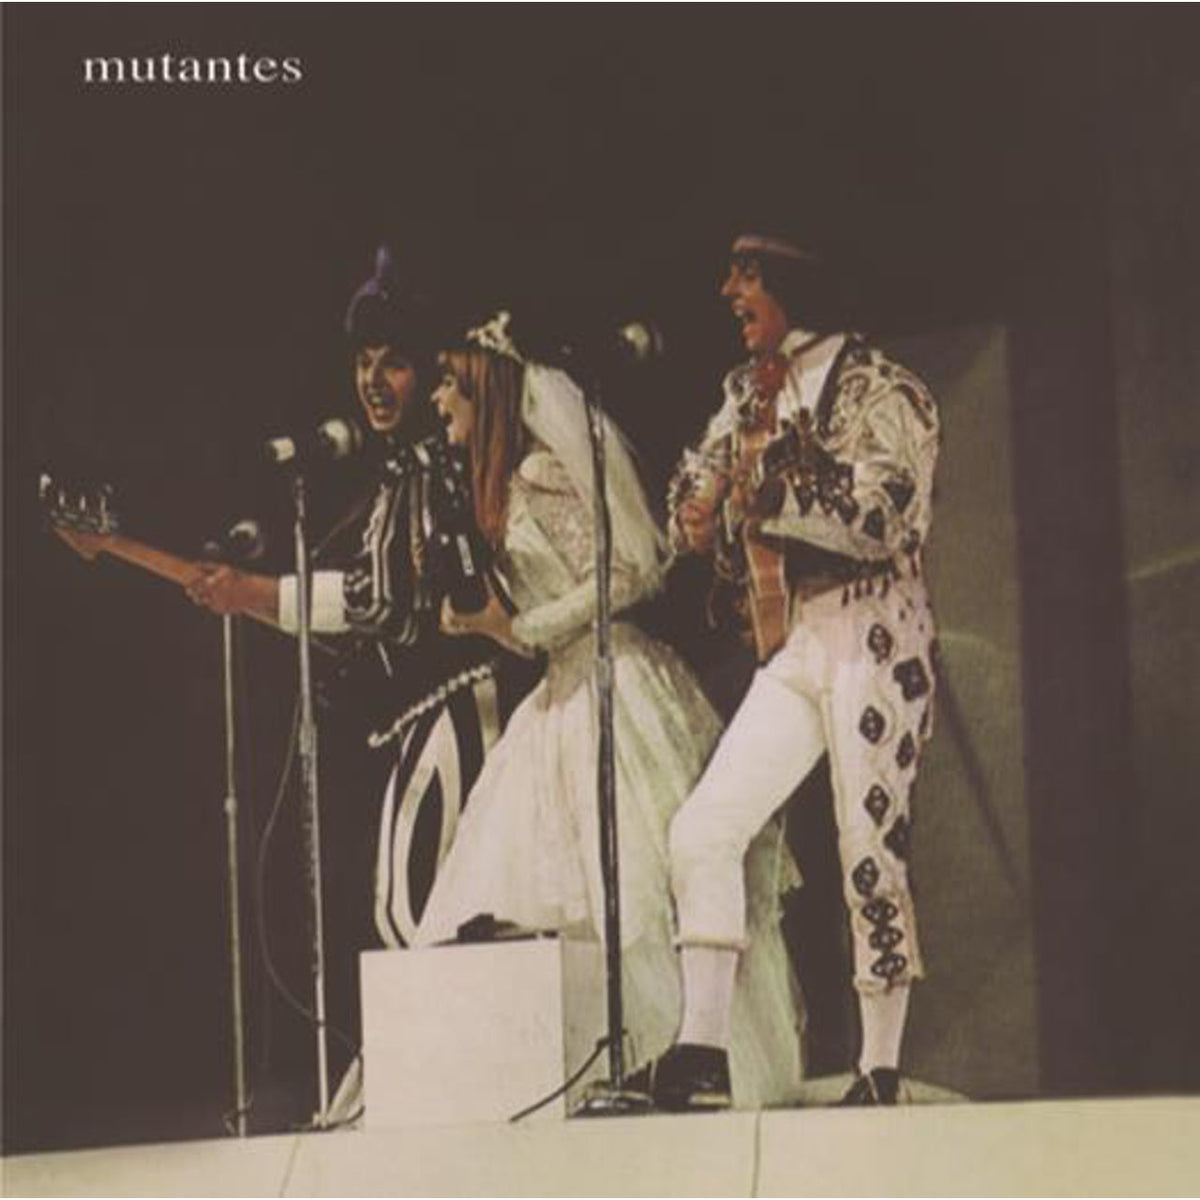 Os Mutantes - Mutantes LP (Reissue, Limited Edition, Remastered, Green Vinyl)